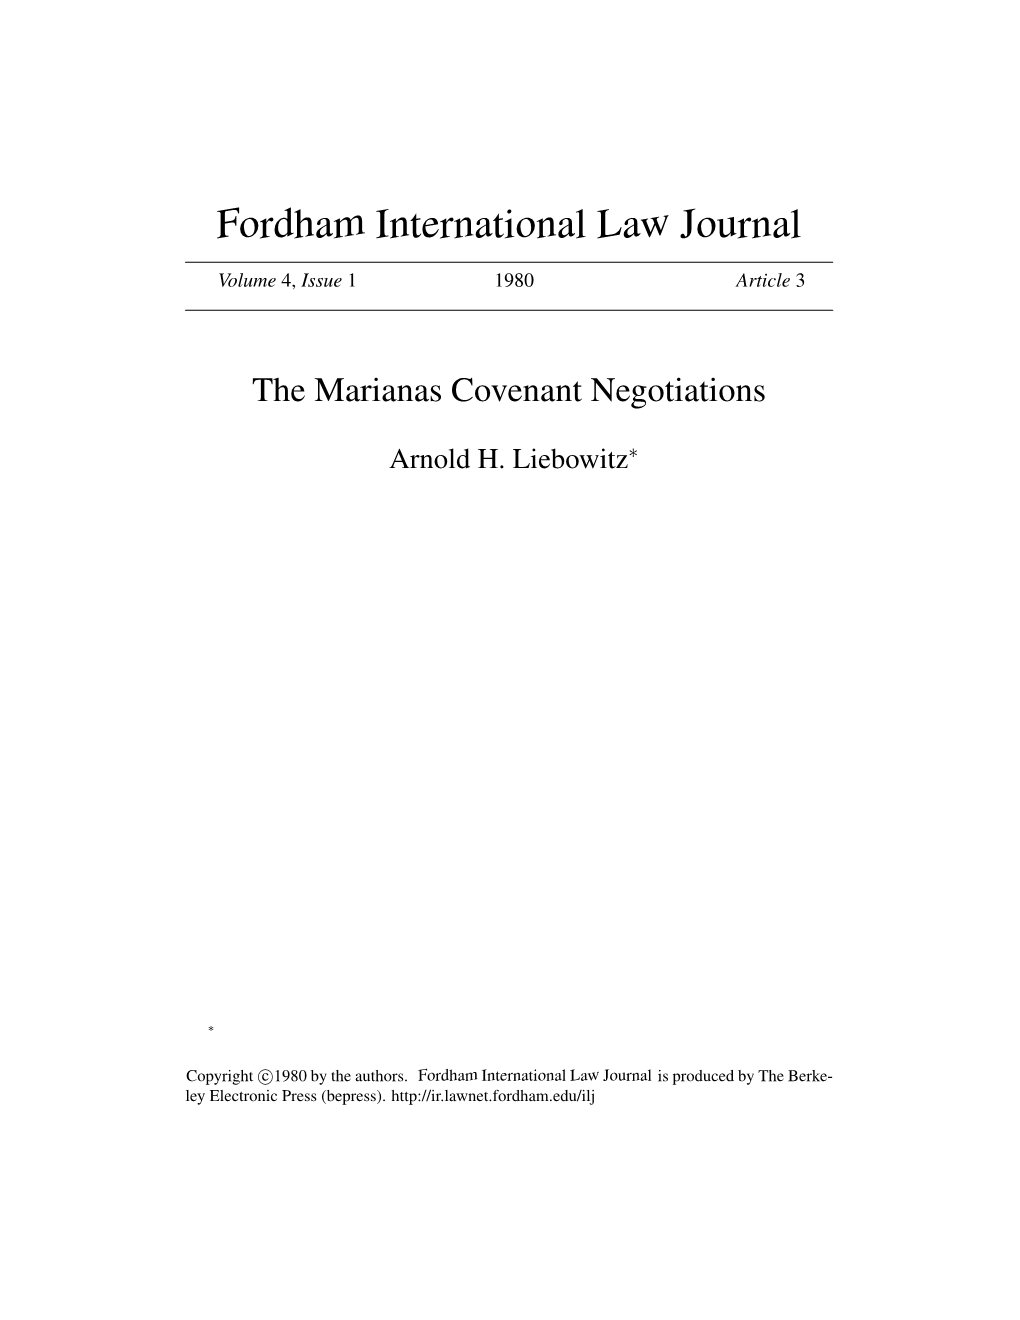 The Marianas Covenant Negotiations